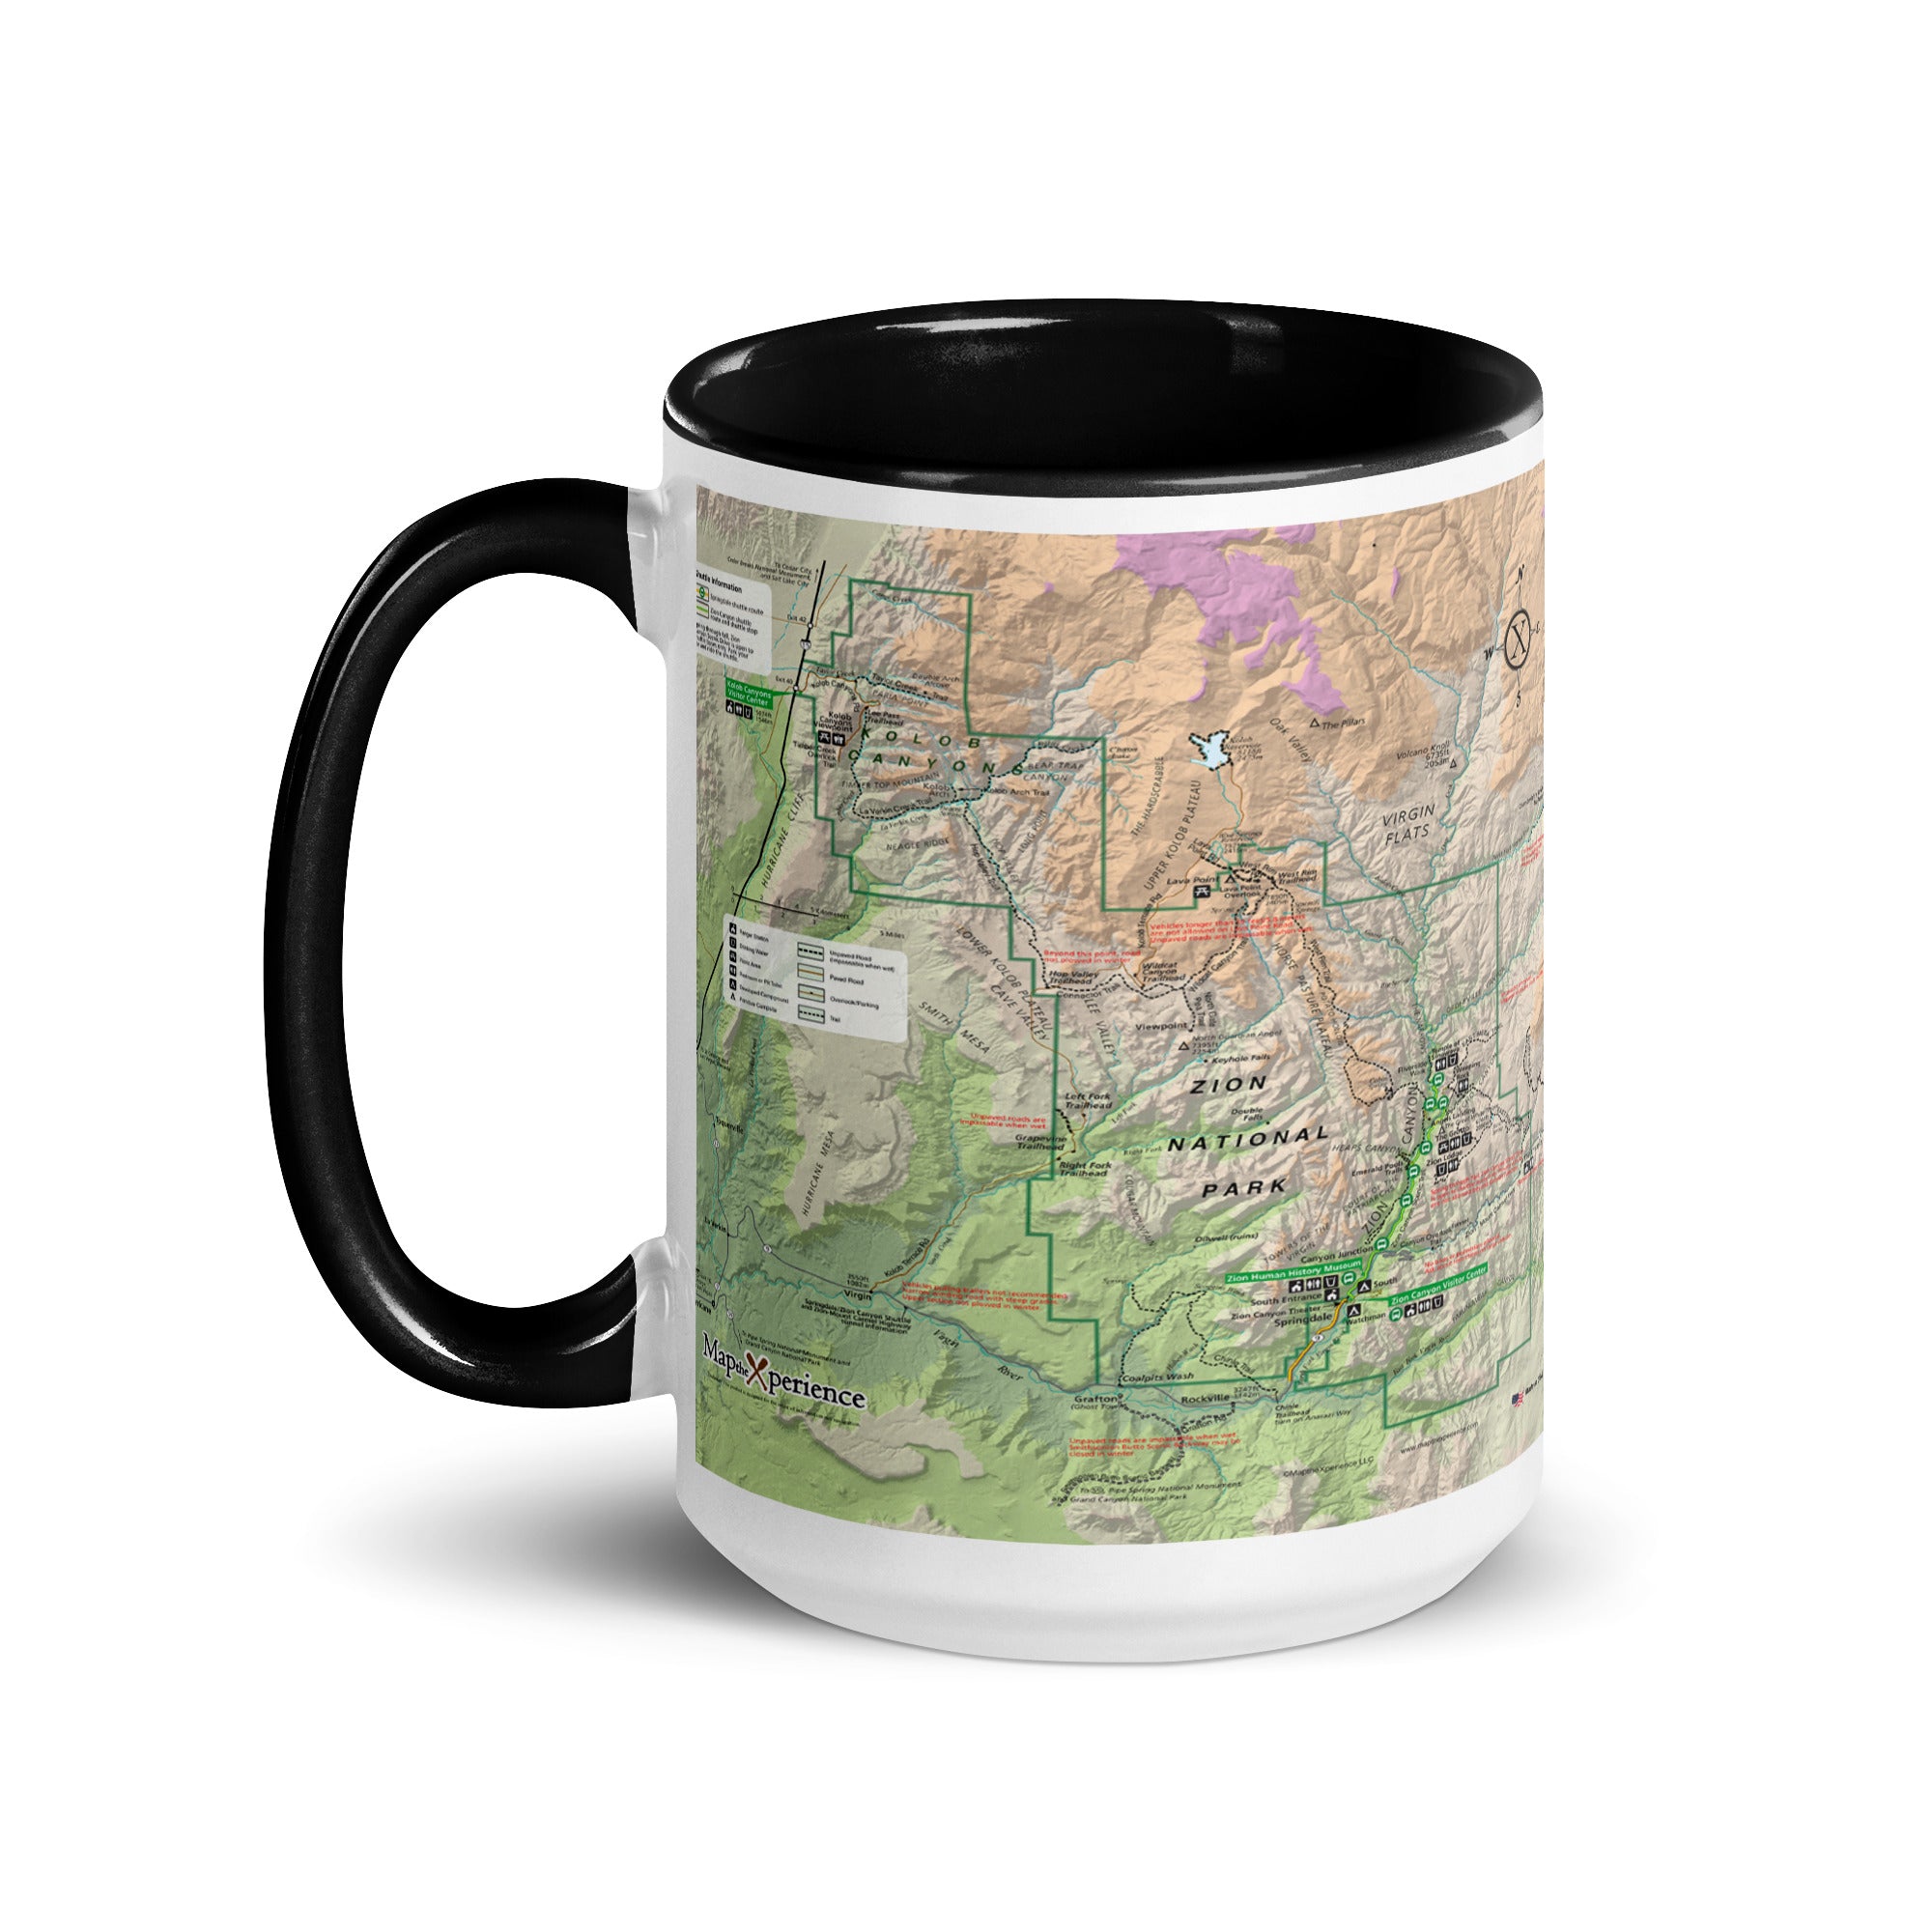 Zion National Park Mug with Black Inside